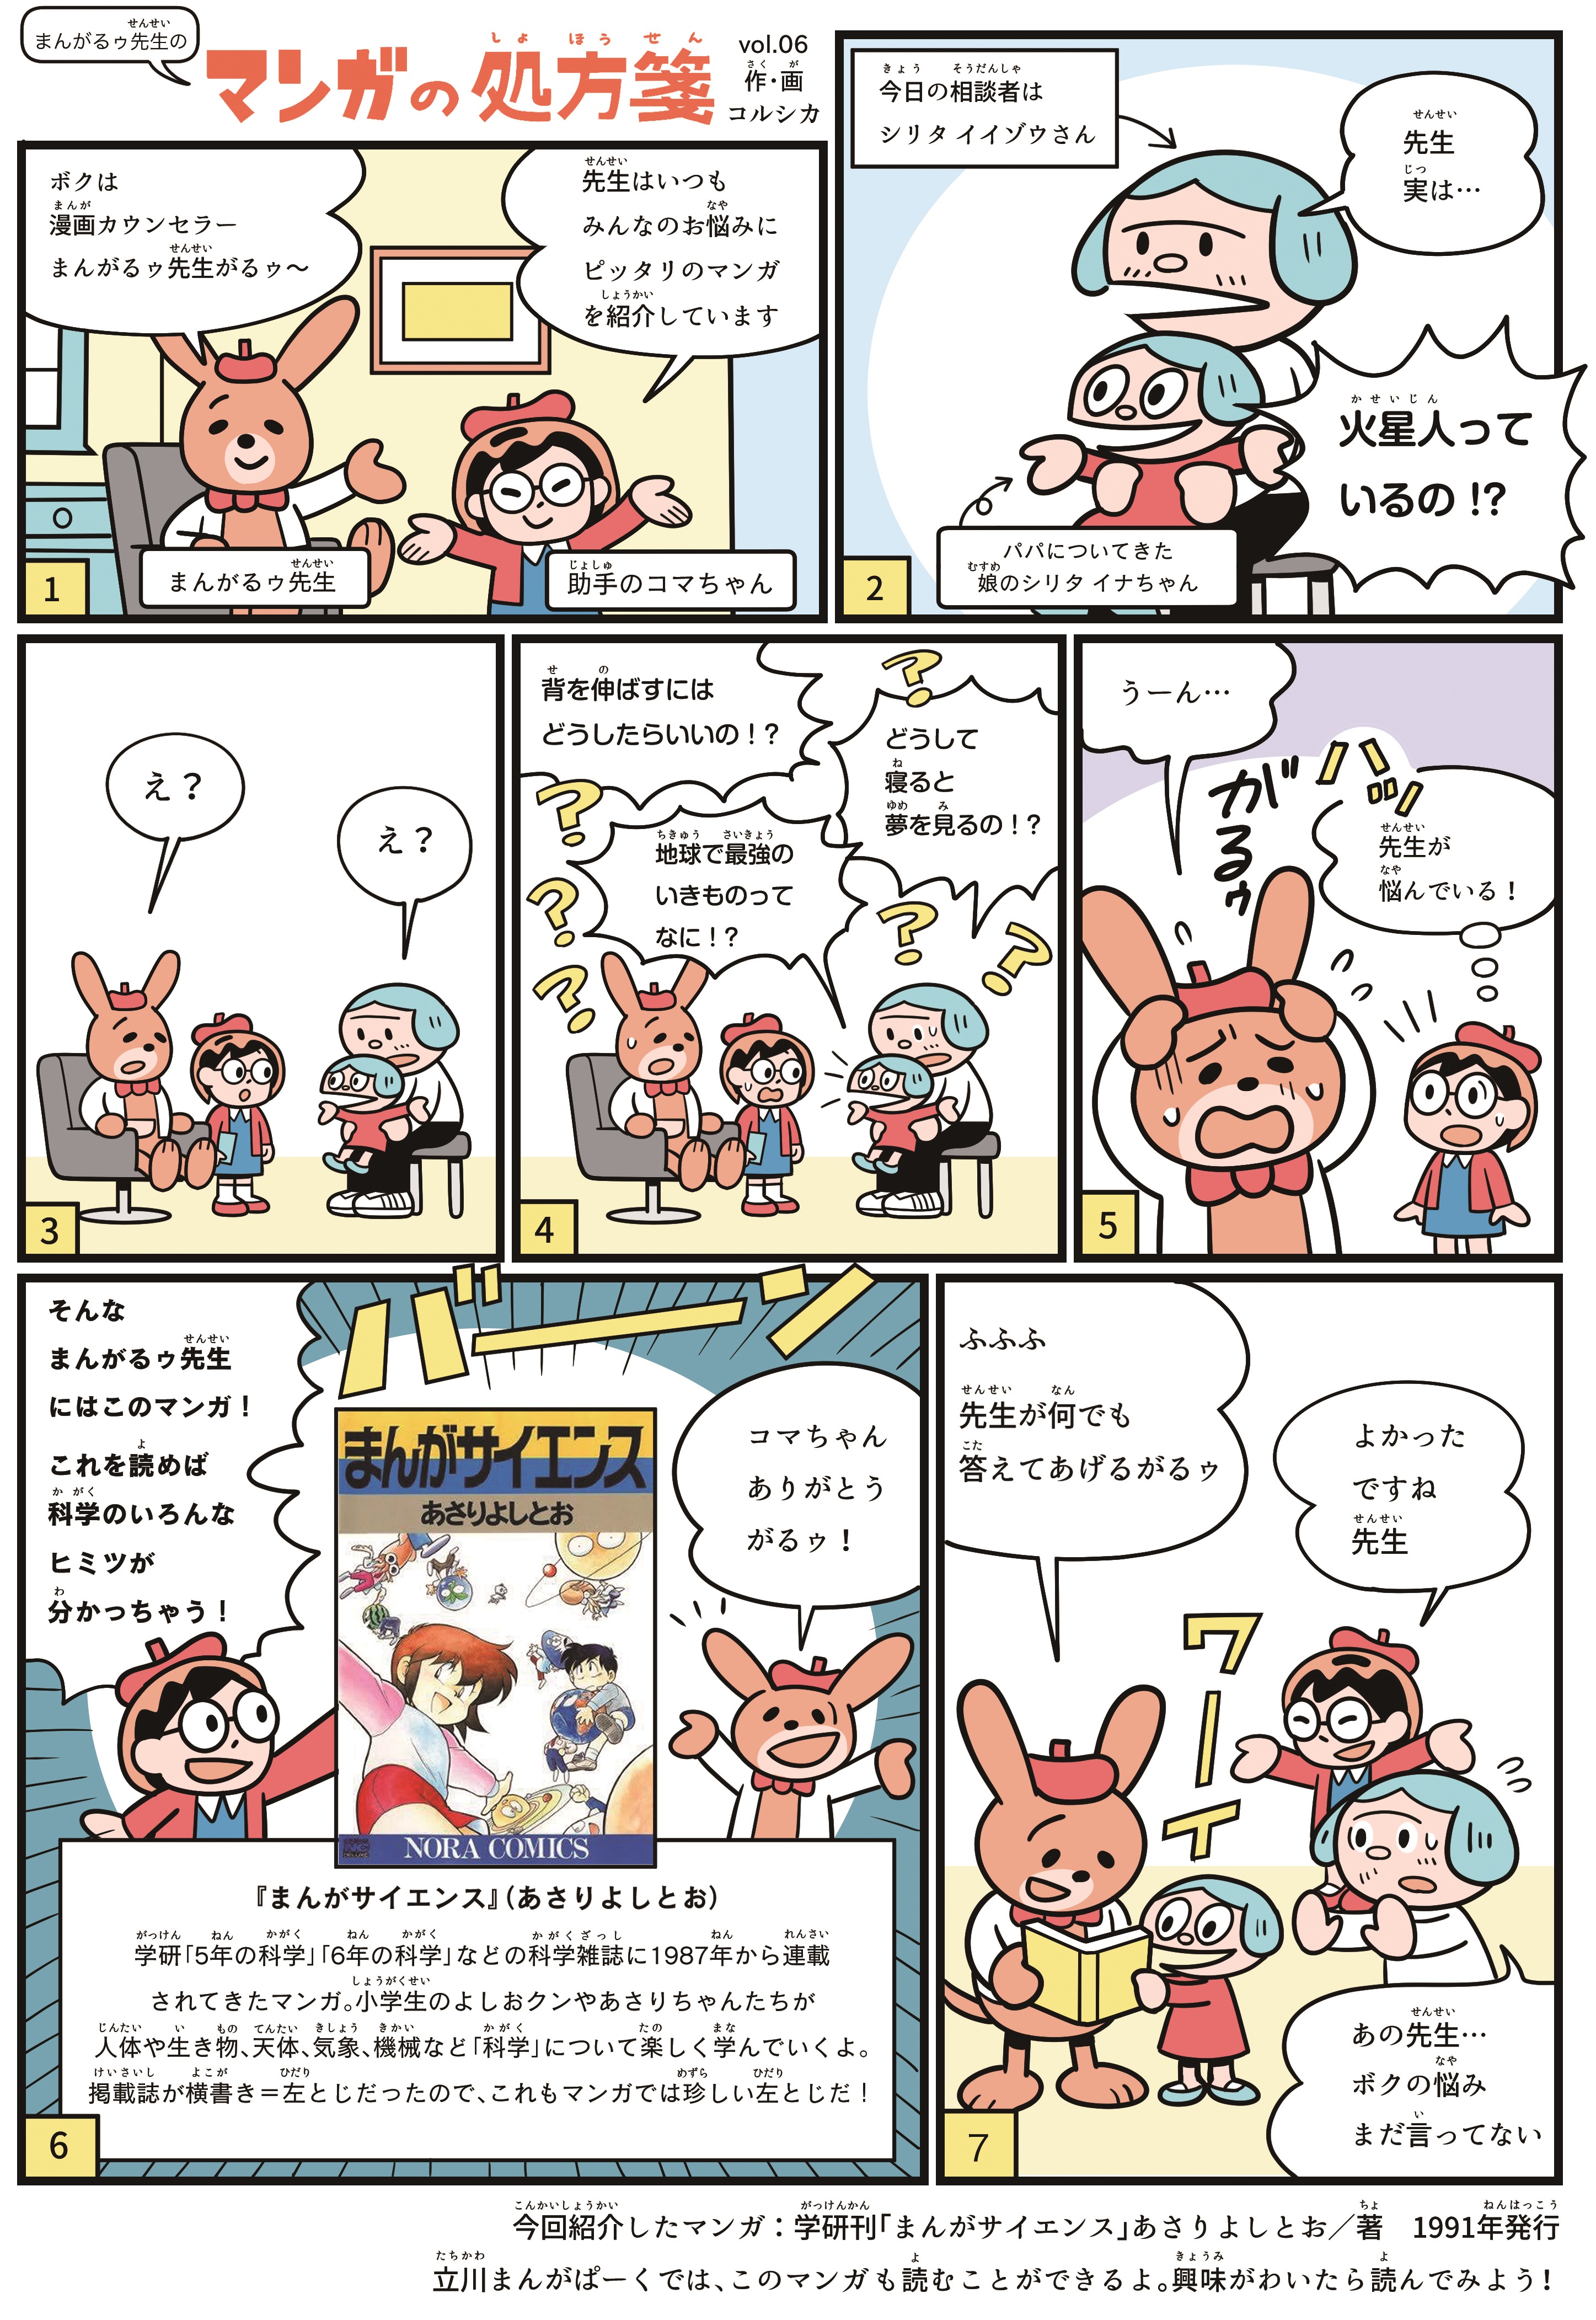 https://mangapark.jp/topics/2019/02/25/images/mangaroosensei_vol06.jpg